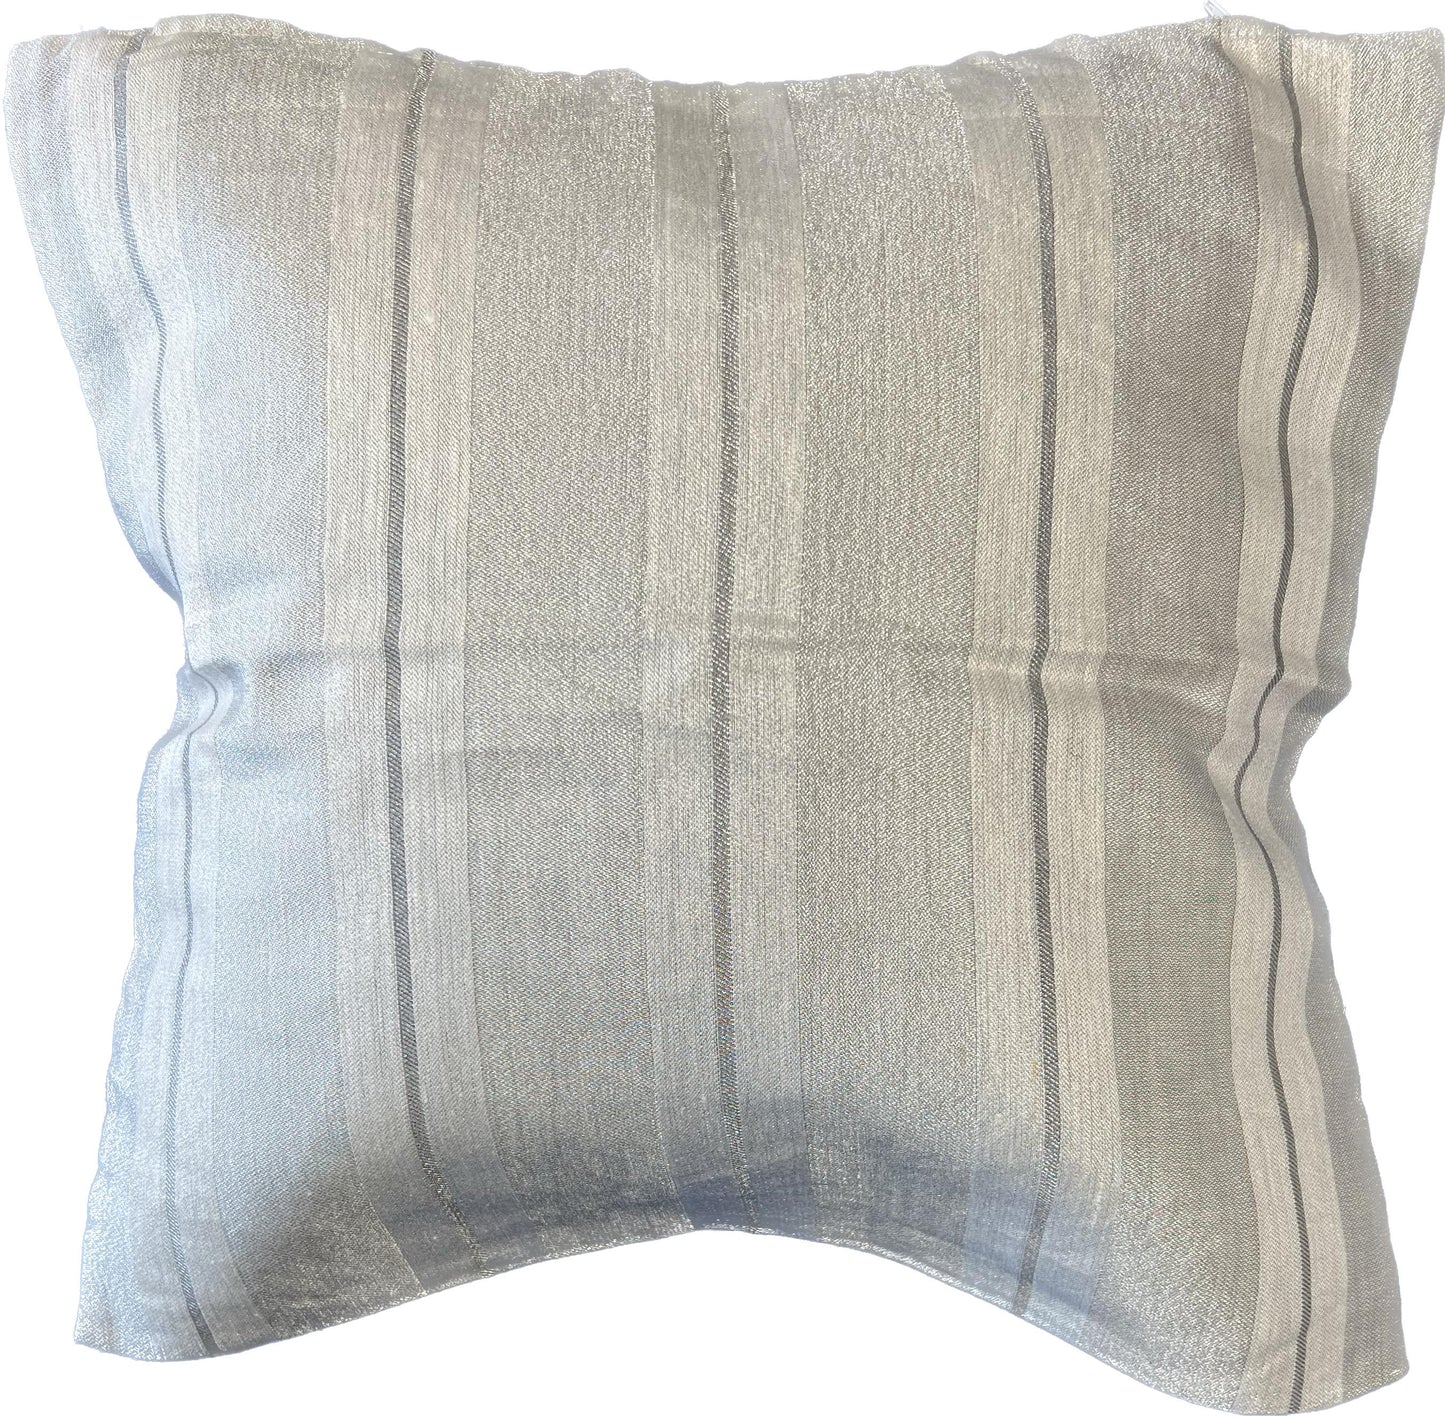 16.5"x18"  Stripe Metallic Pillow Cover*** Special Price***